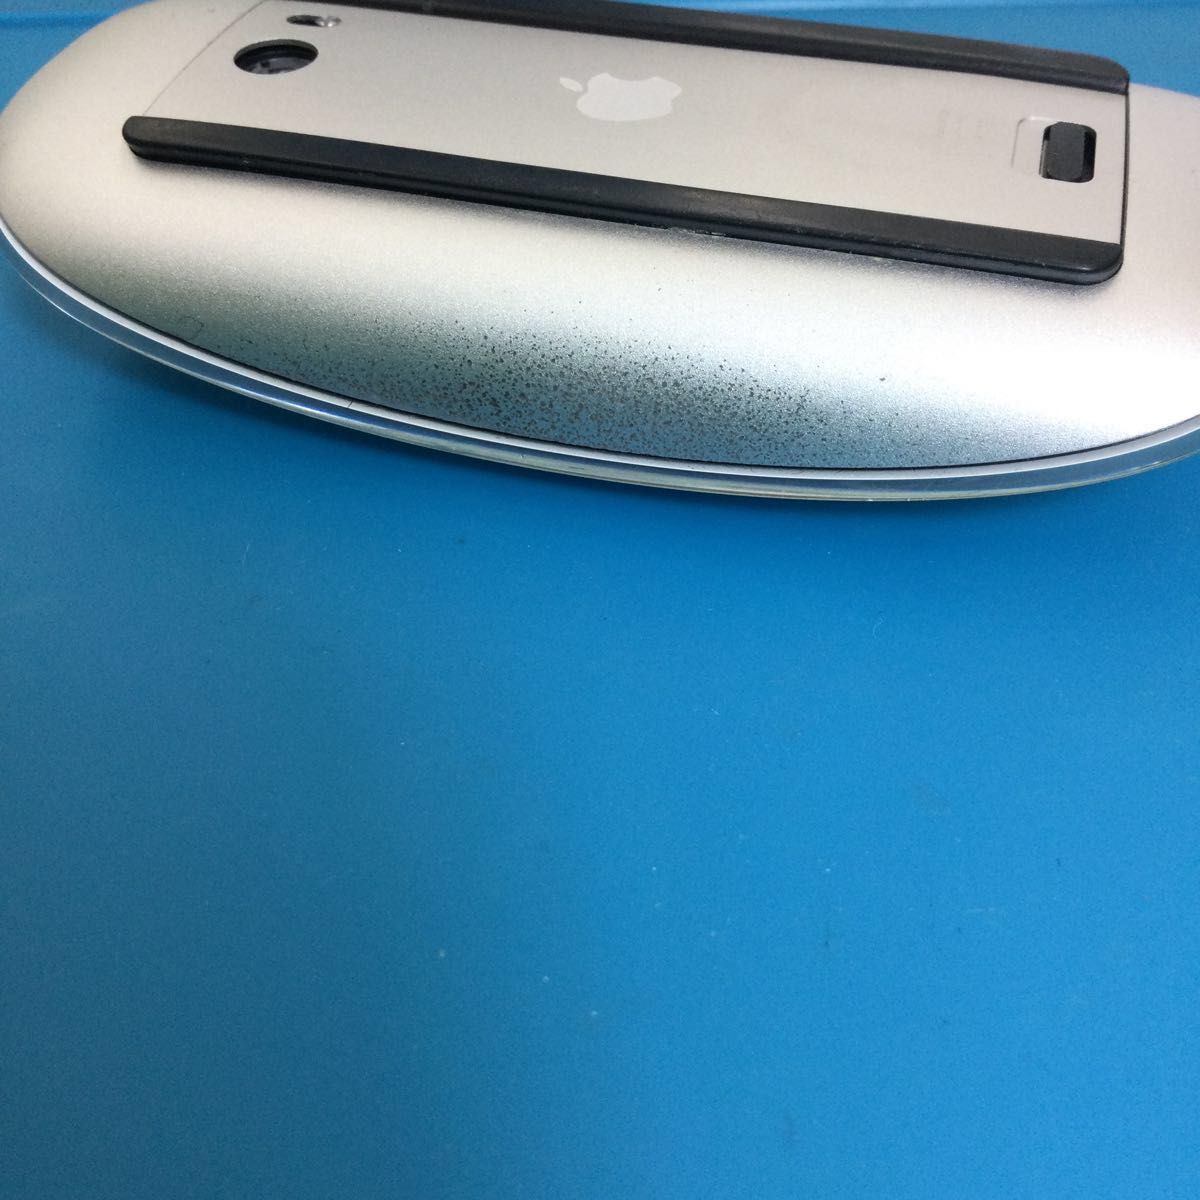 Apple  Magic Mouse. ホワイト　本体のみ